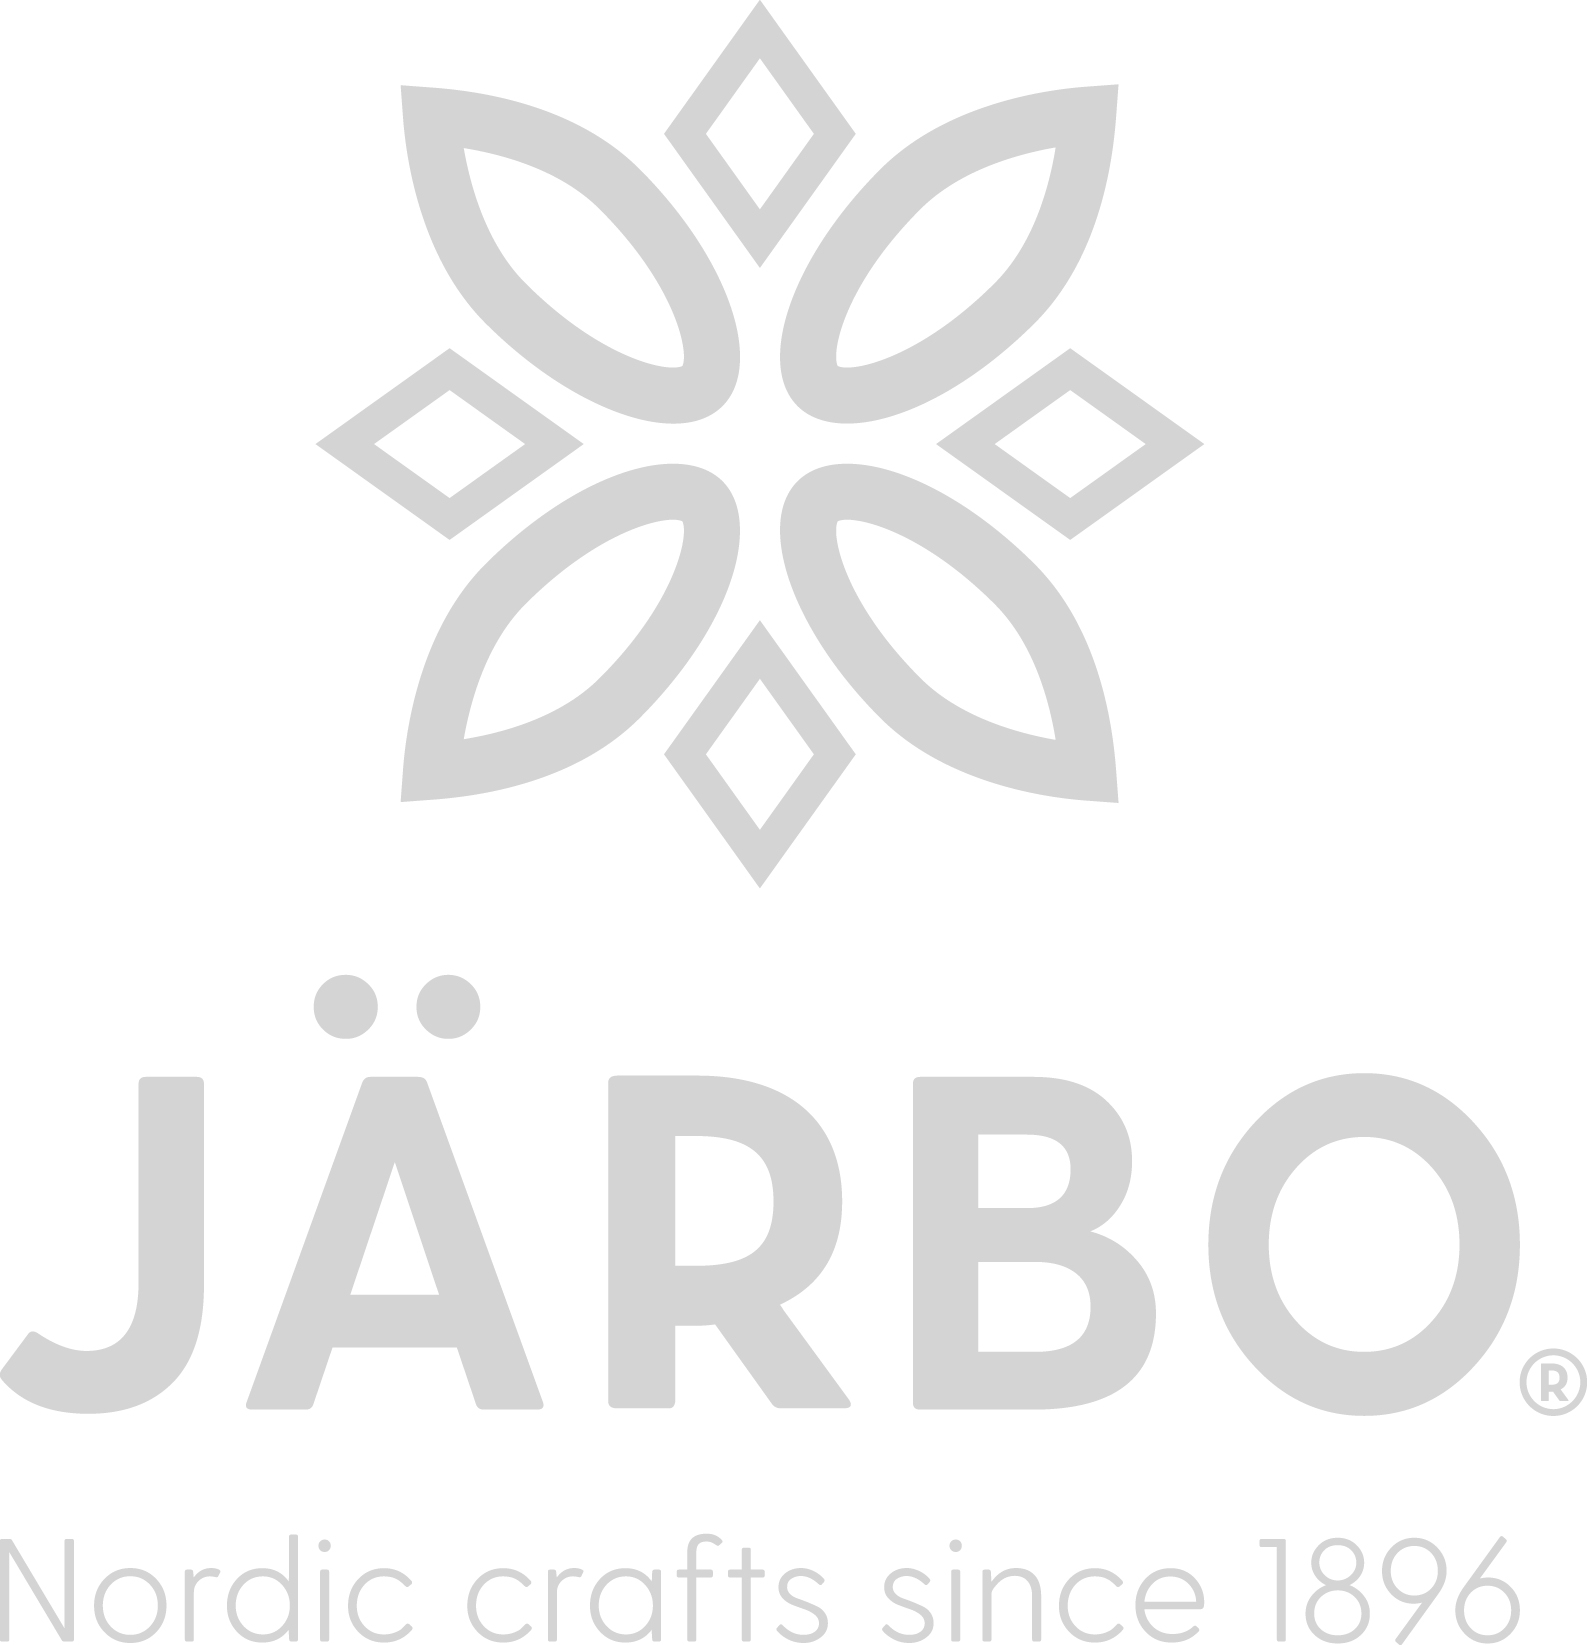 Pastillask nr 8 - Järbo Bruk